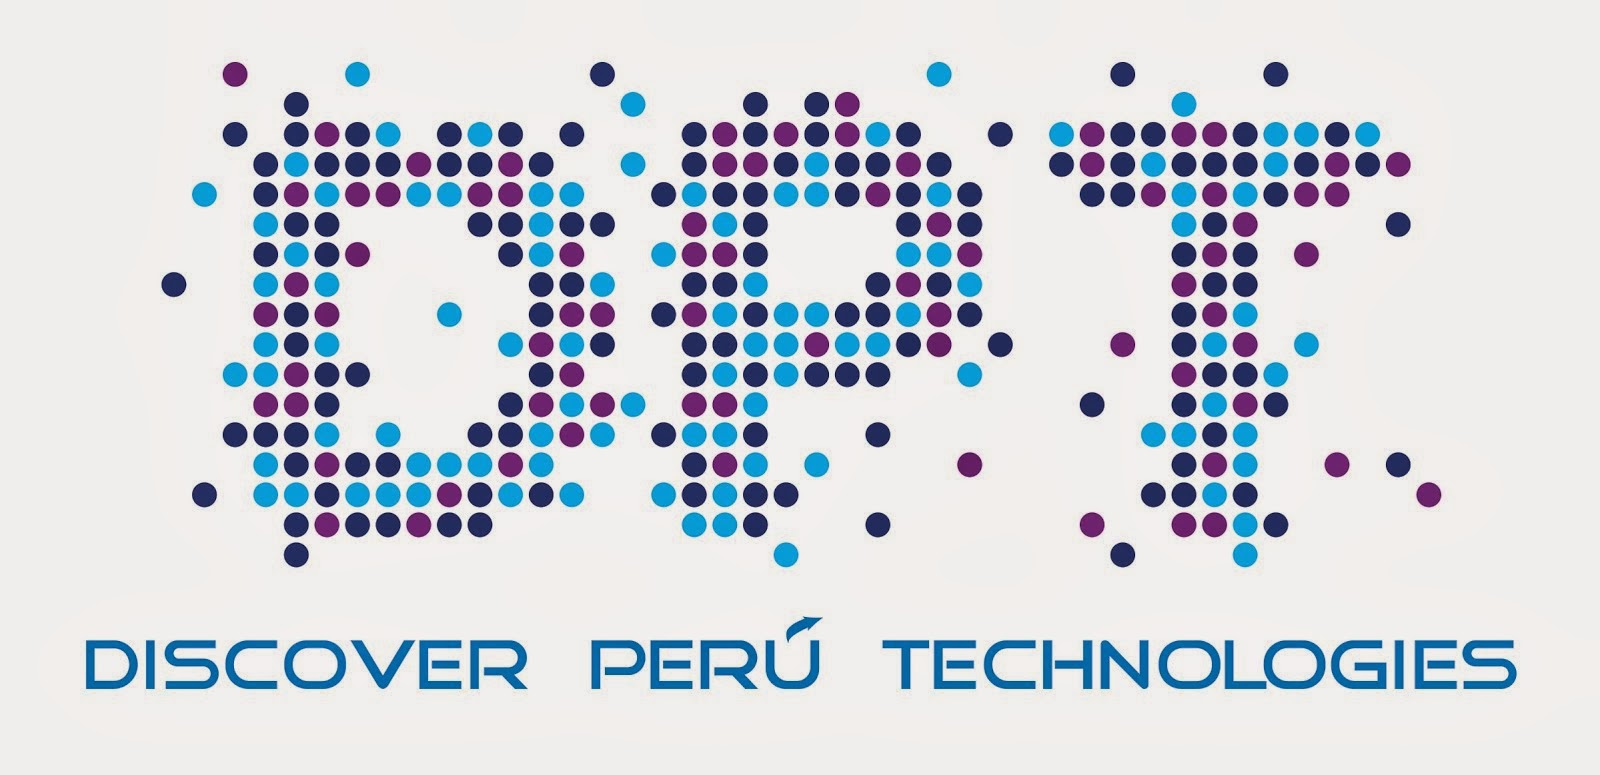 Discover Perú technologies